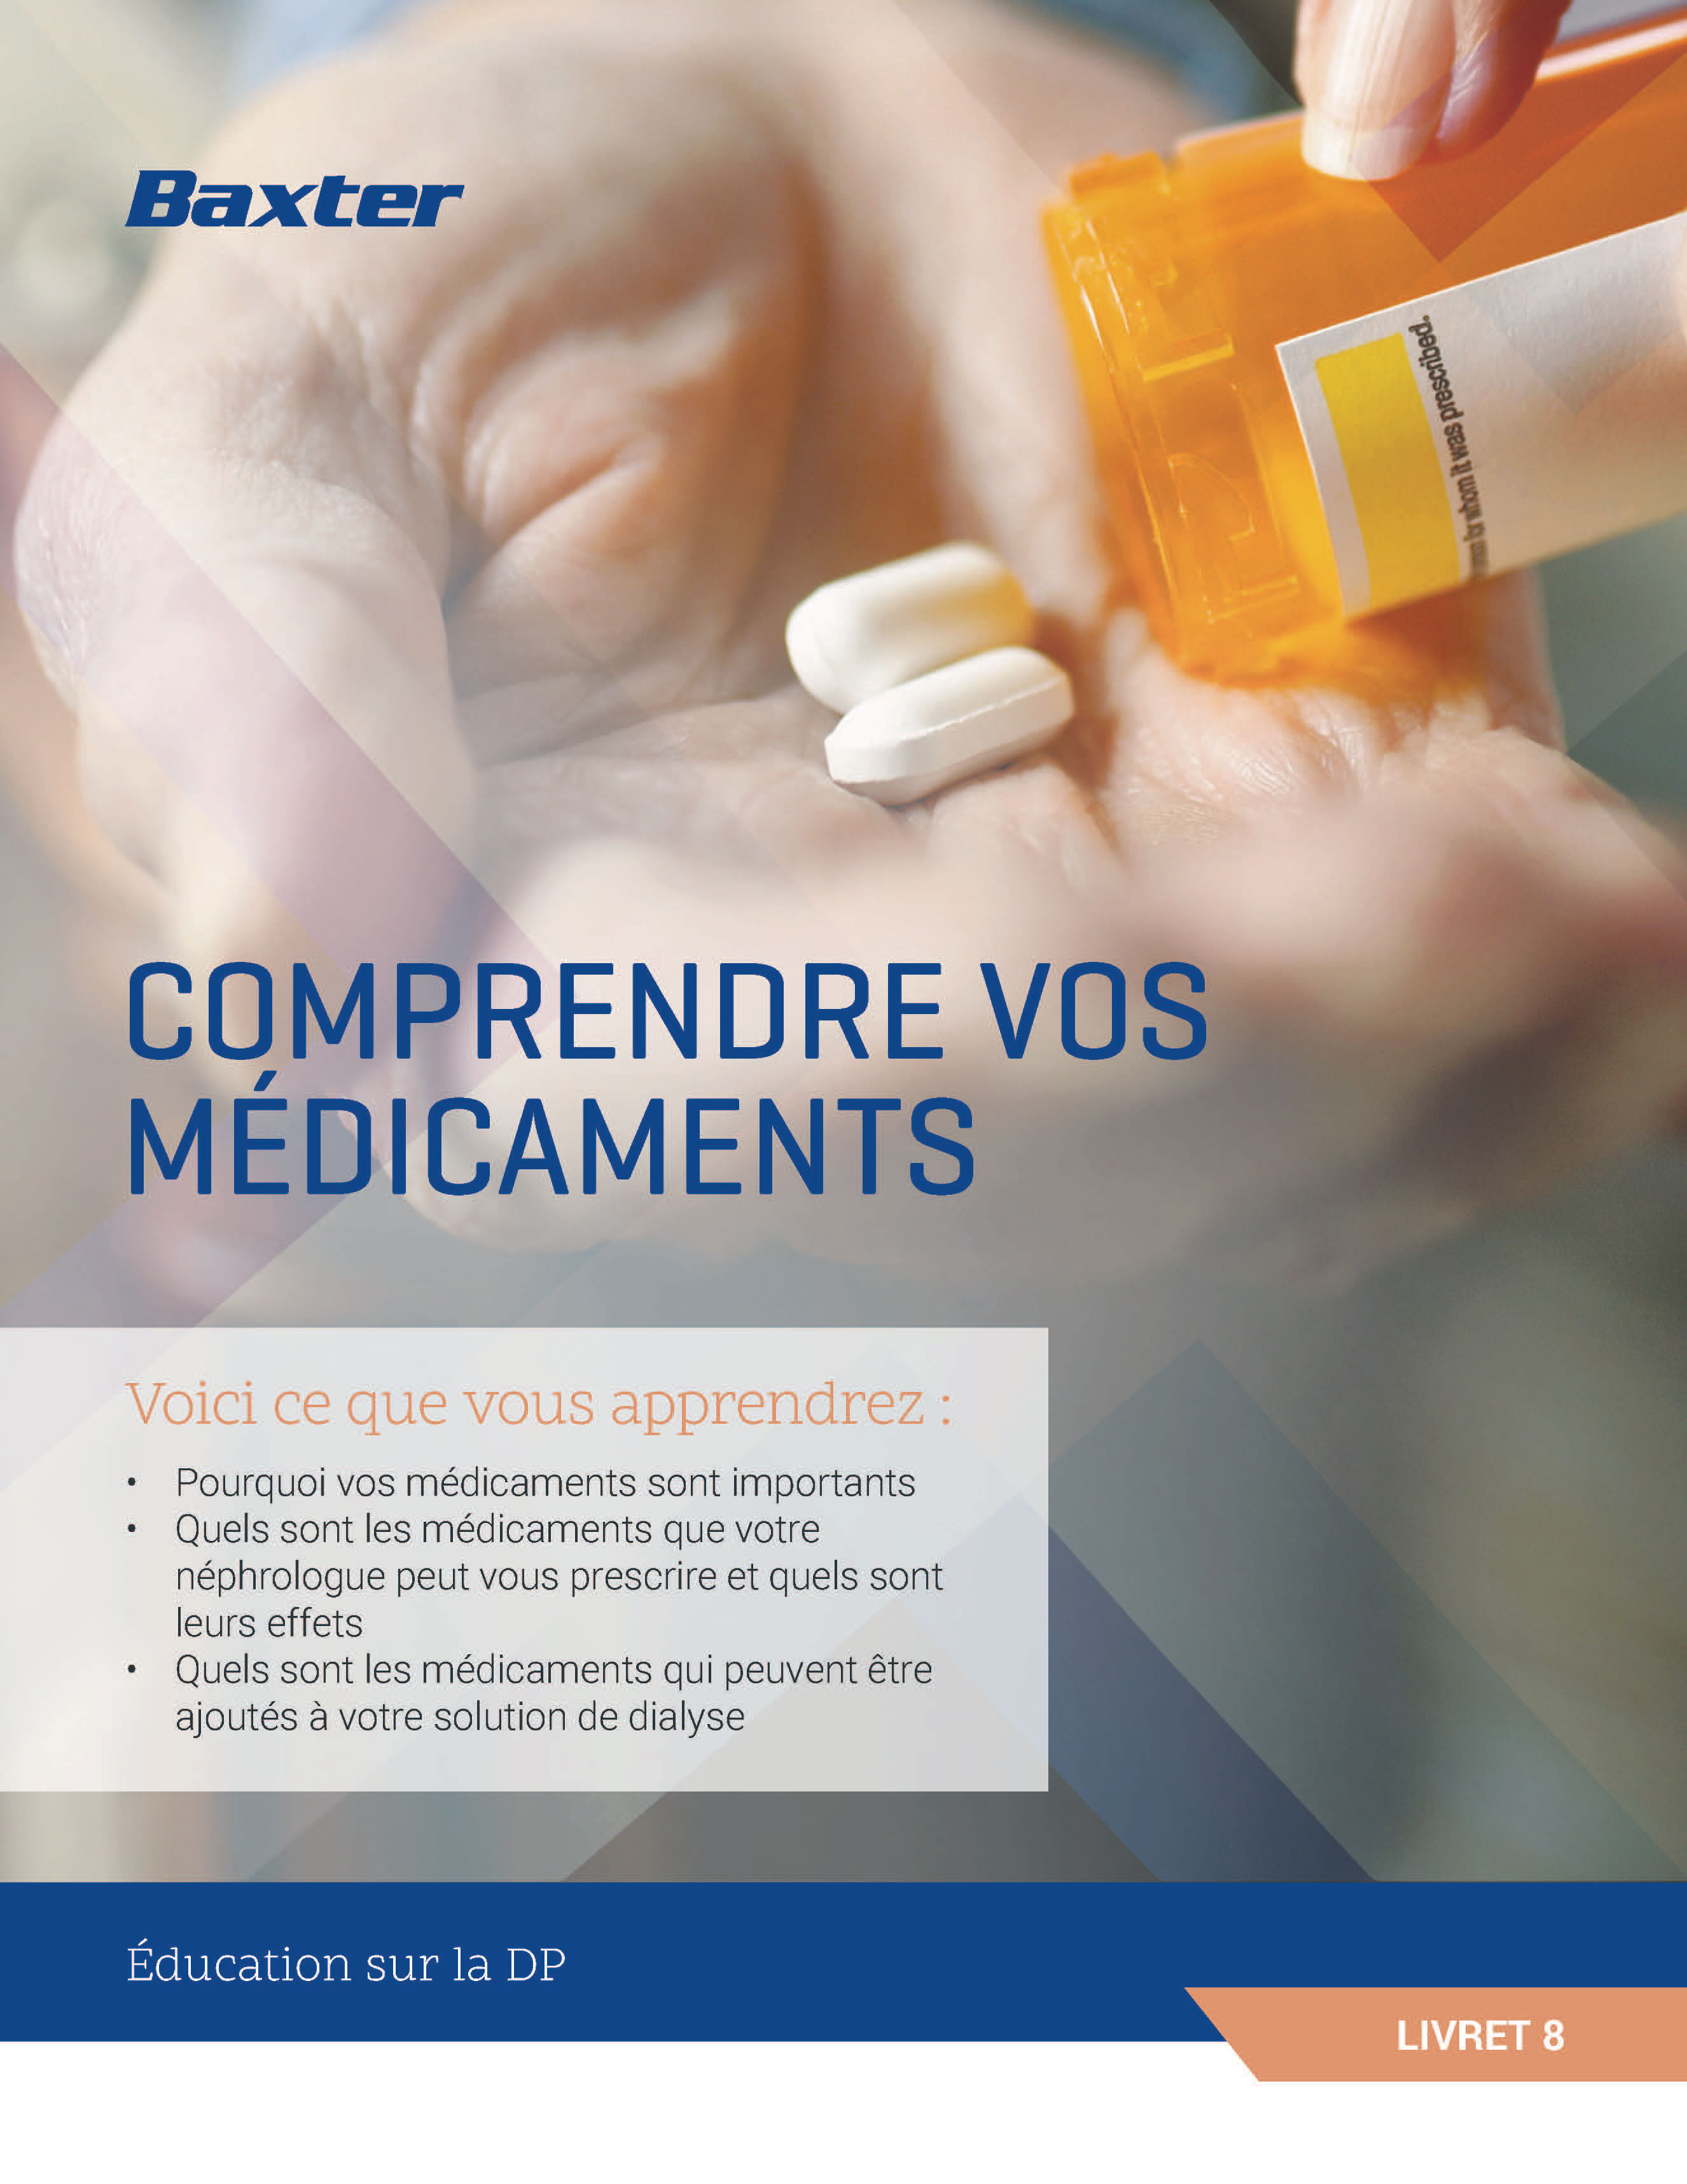 Open Booklet8 Medications FR 1